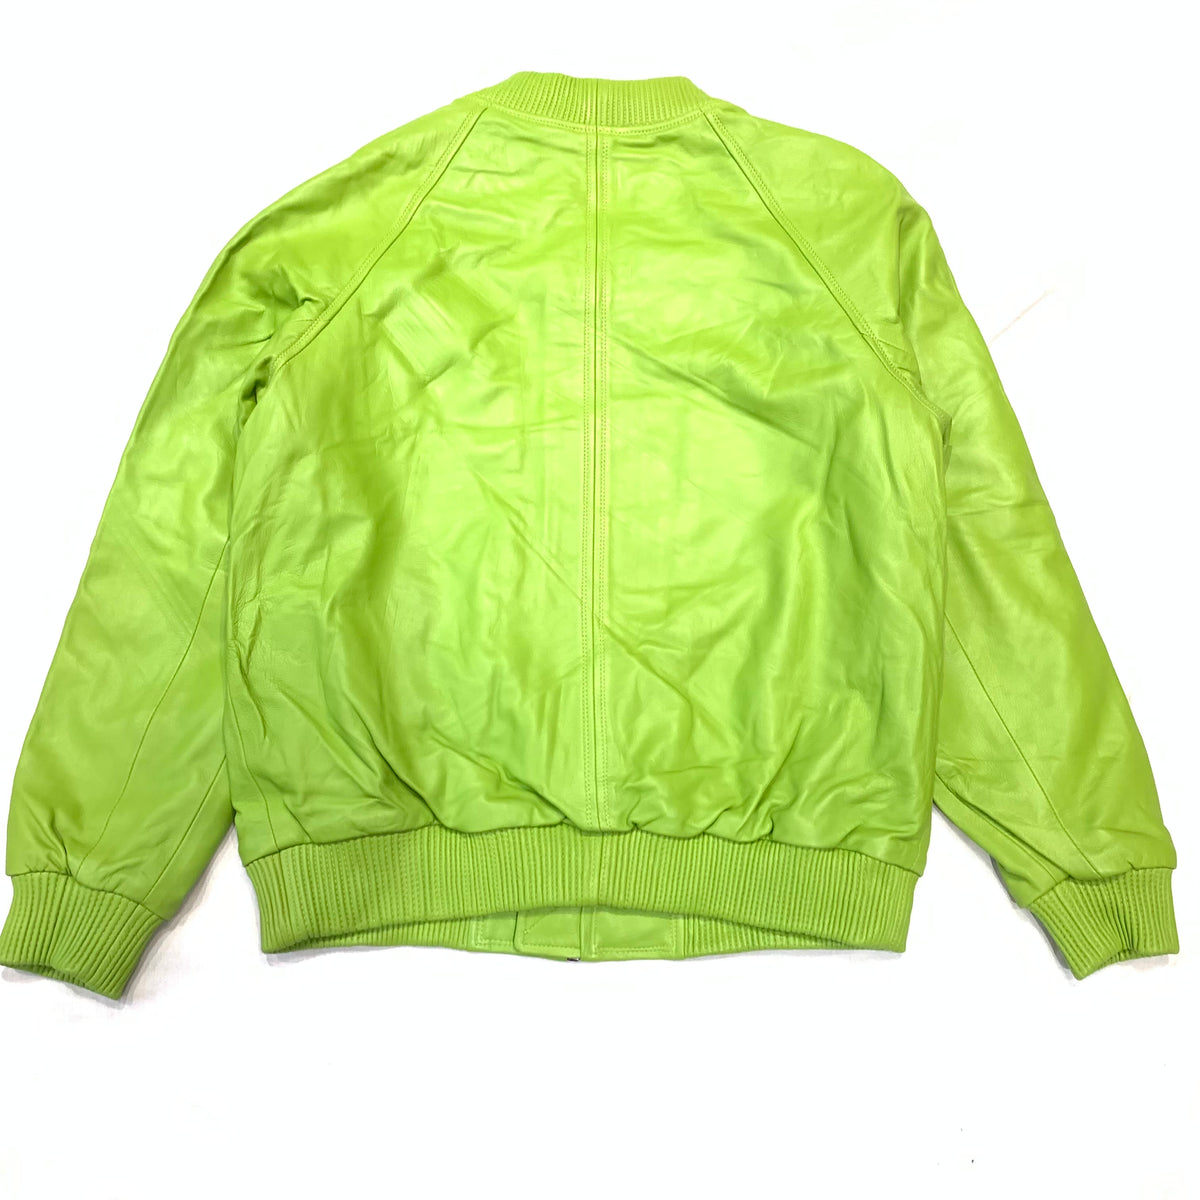 Jakewood Lime Green Lambskin Varsity Jacket - Dudes Boutique